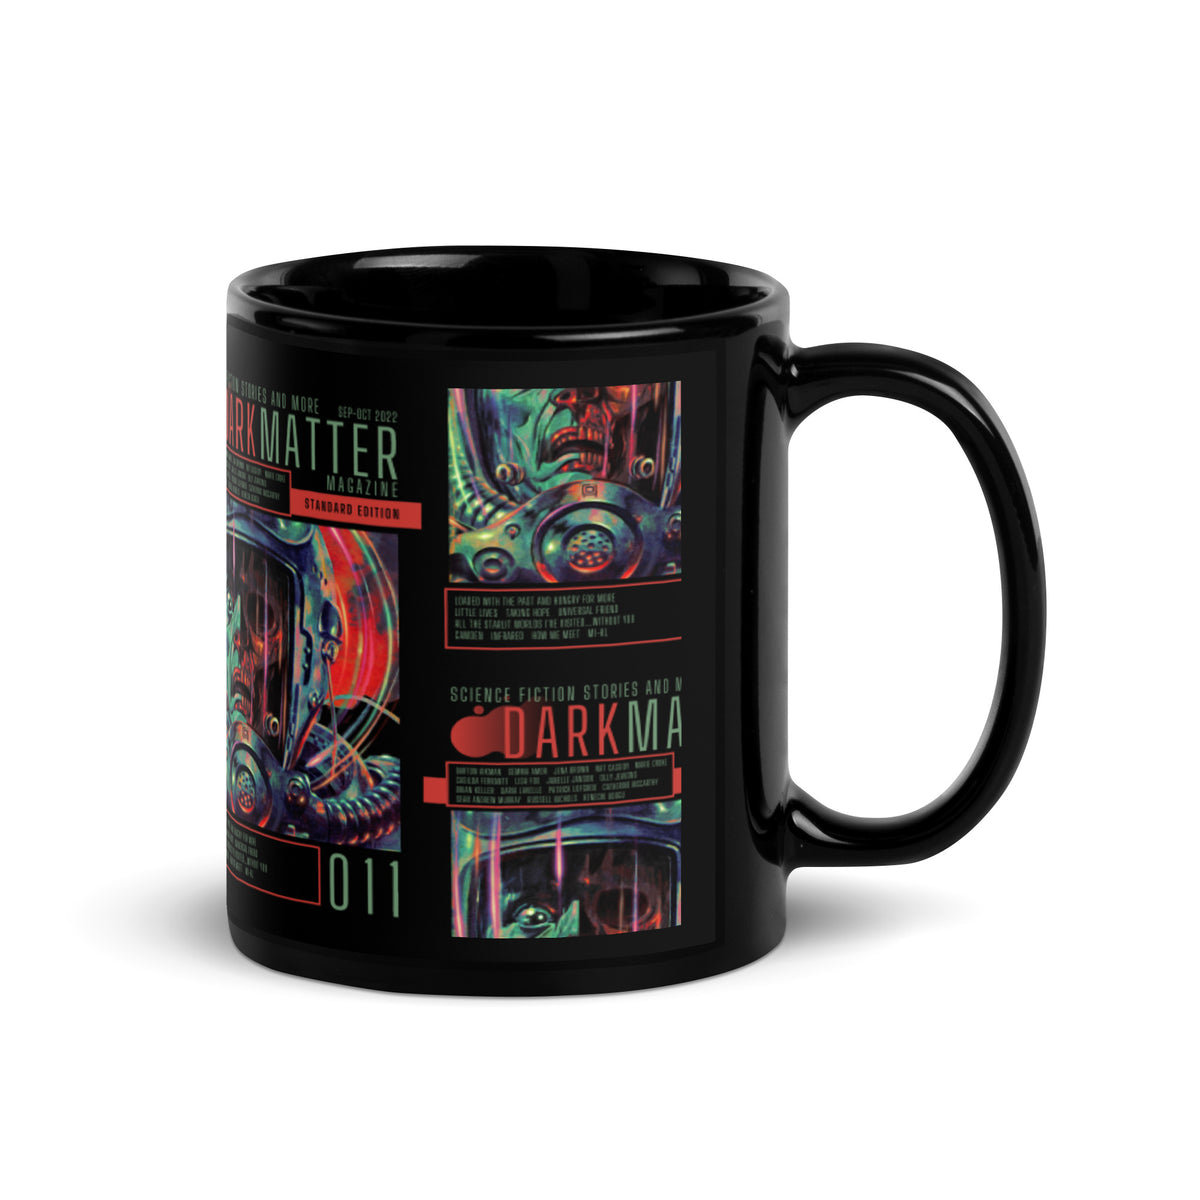 "Dark Matter Magazine Issue 011" 11oz Mug